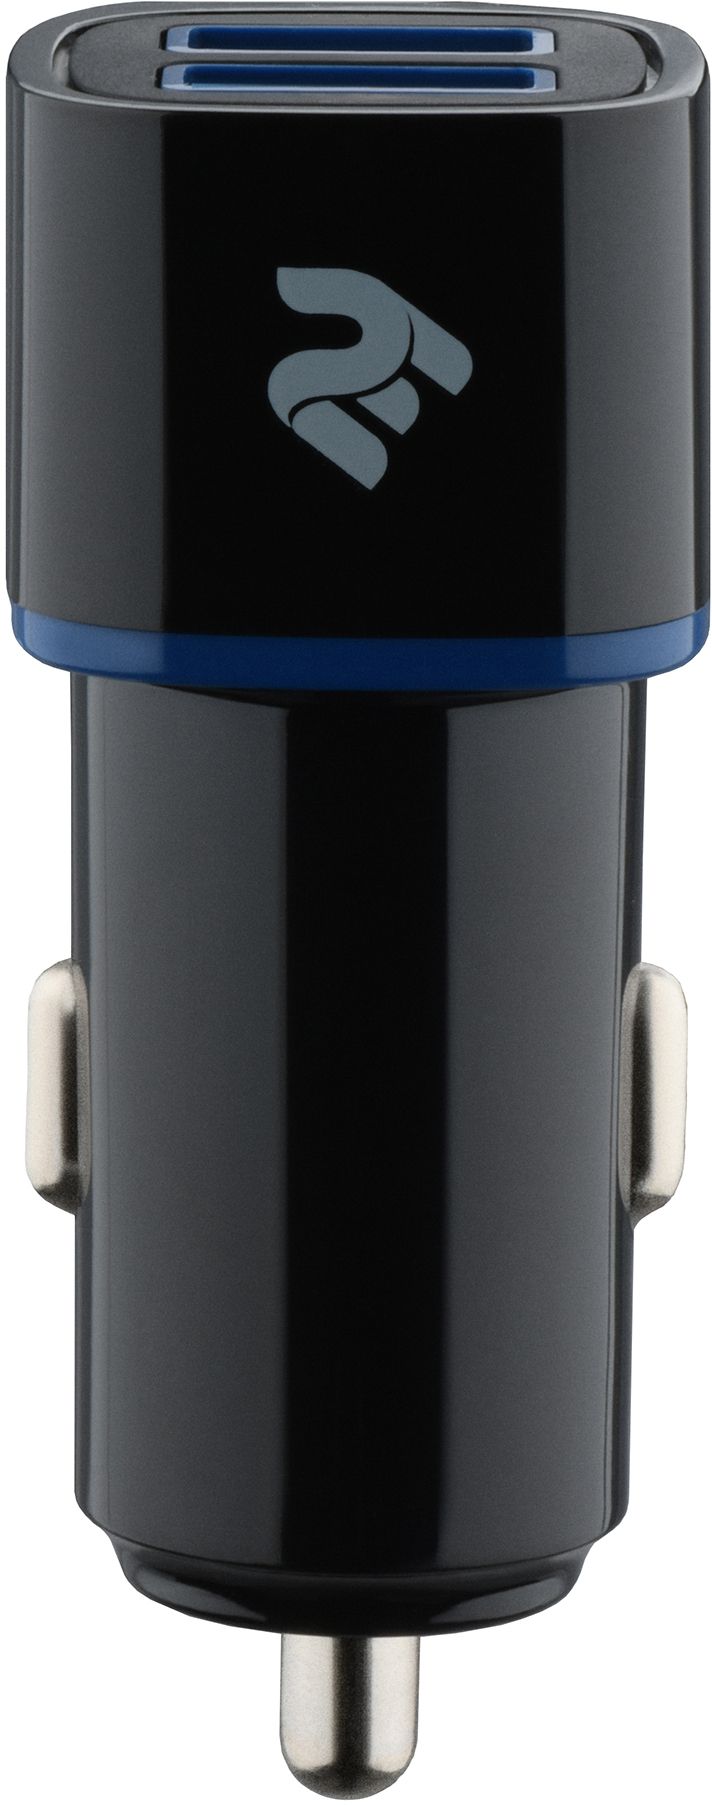 2E Dual USB Car Charger 2.4Ax2.4A Black (2E-ACR01-B)